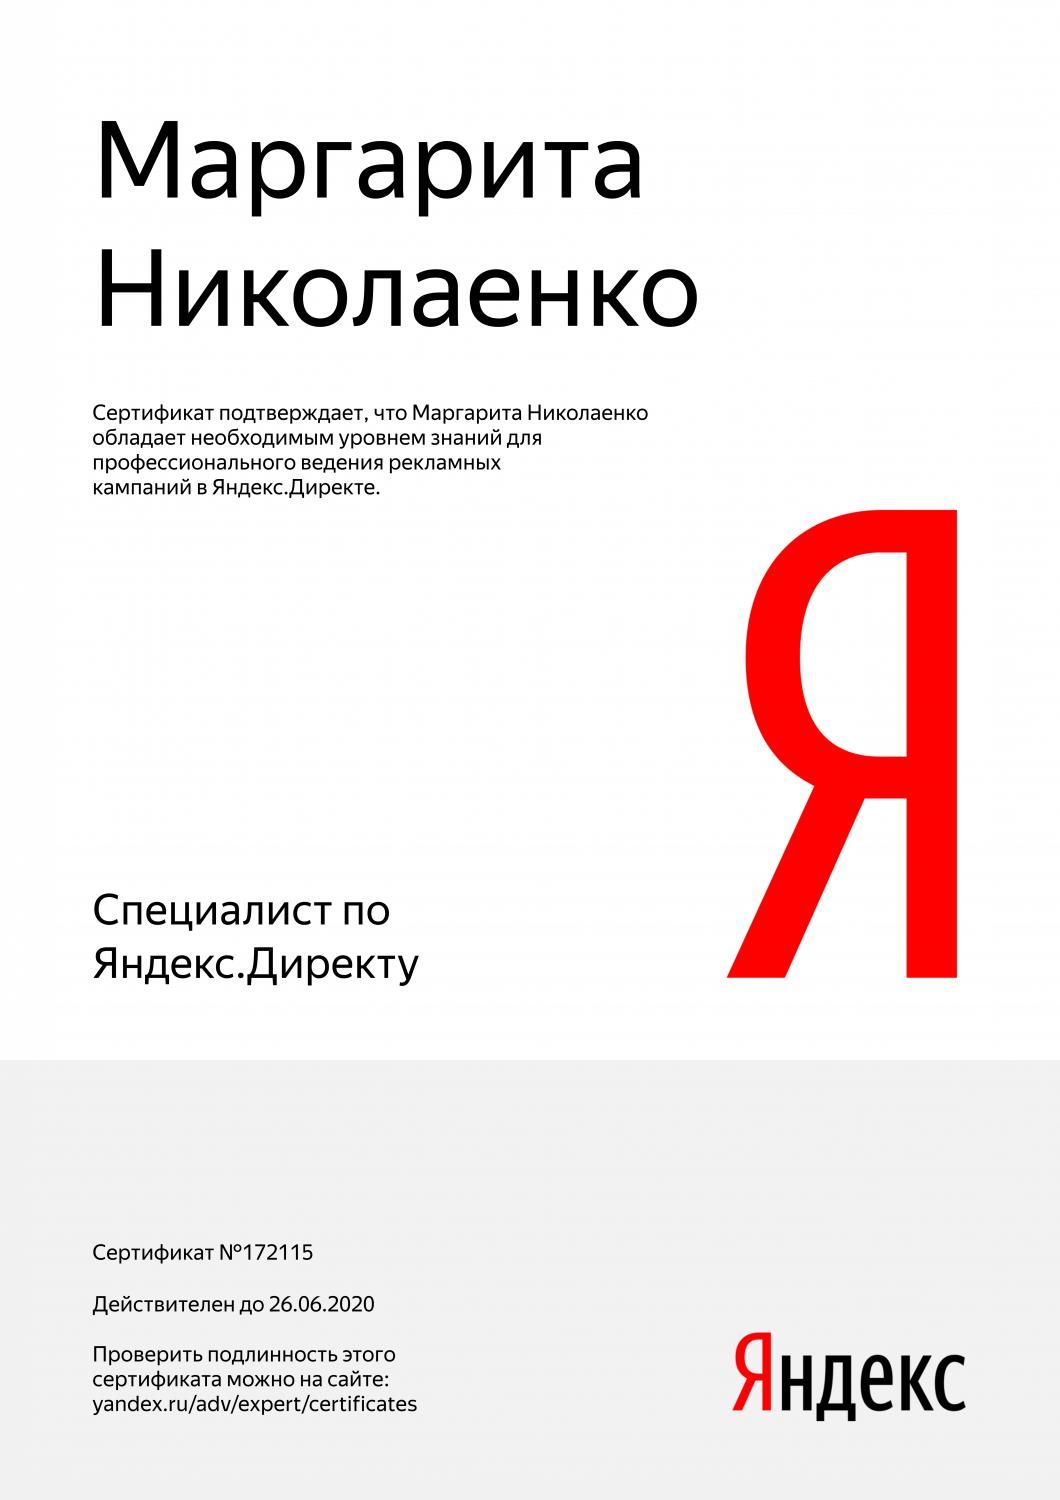 Сертификат специалиста Яндекс. Директ - Николаенко М. в Таганрога